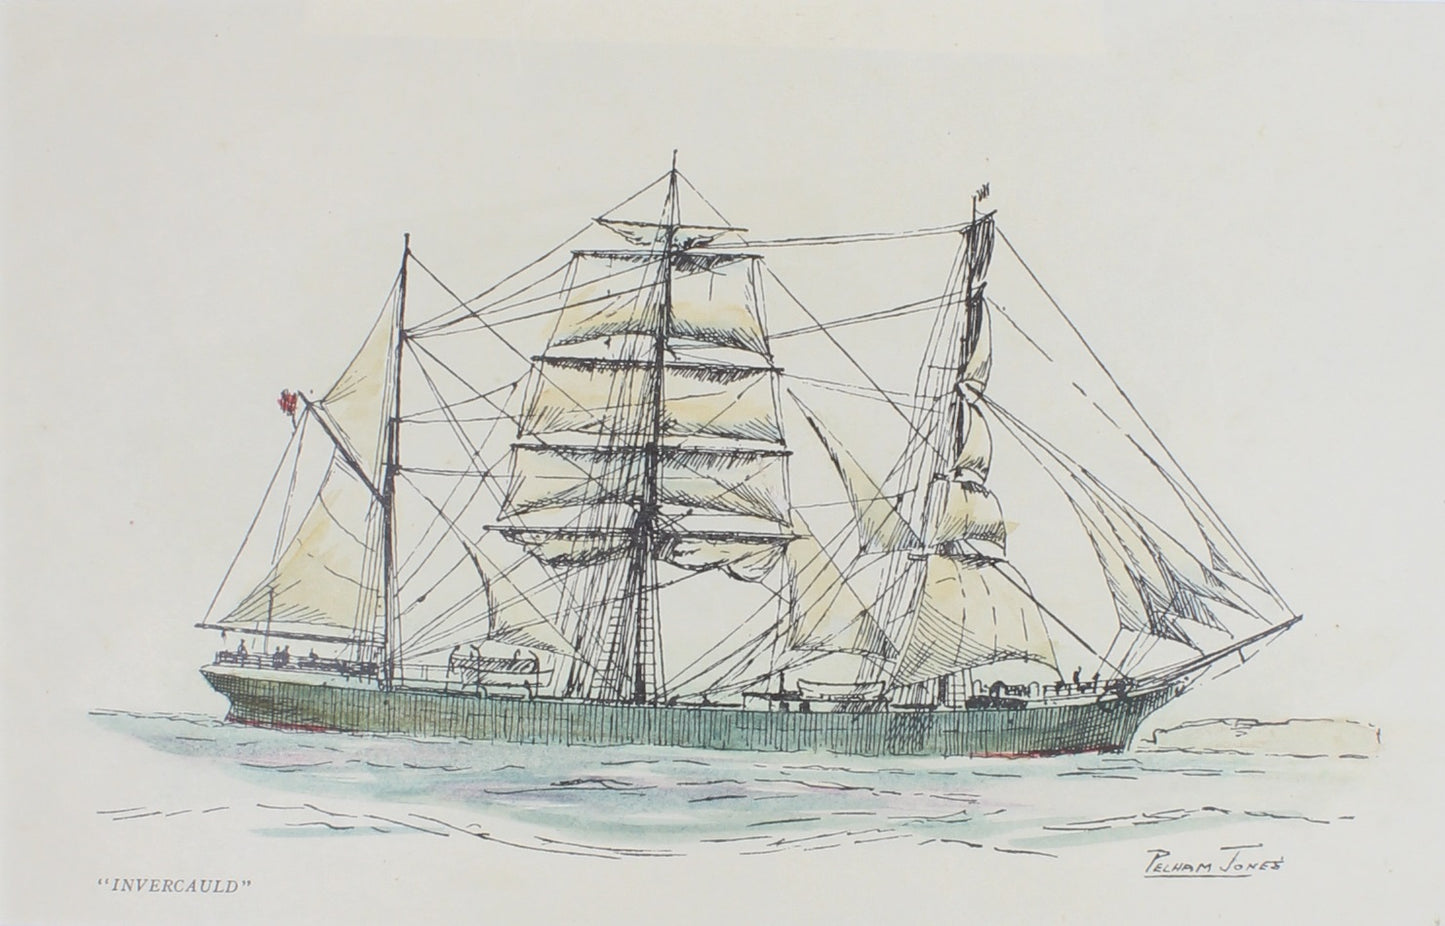 Marine, Bowen, Frank Charles, "Invercauld", Sailing Ships of the London River, c1930